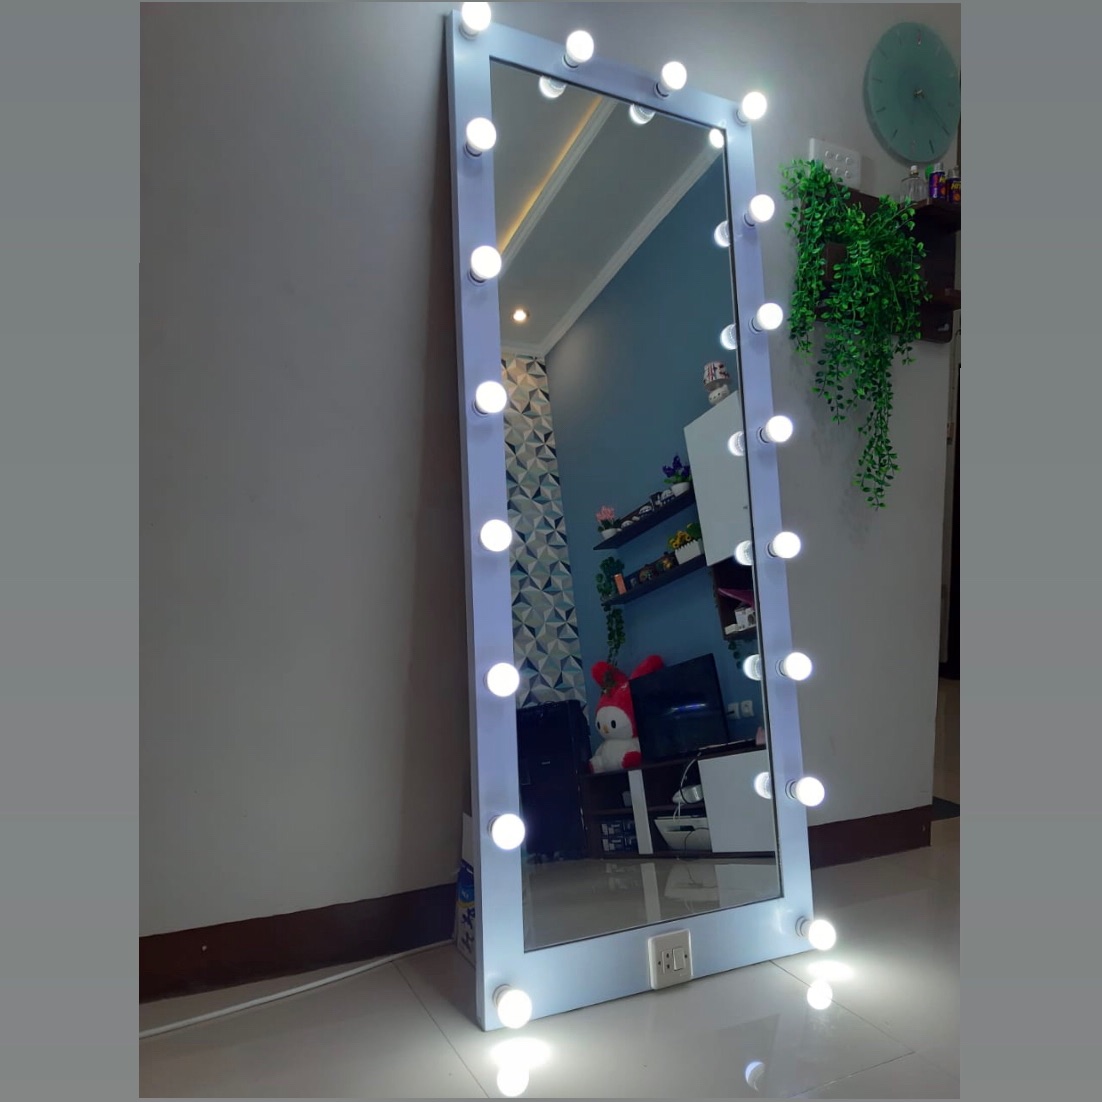 standing mirror led / vanity mirror full body / cermin berdiri